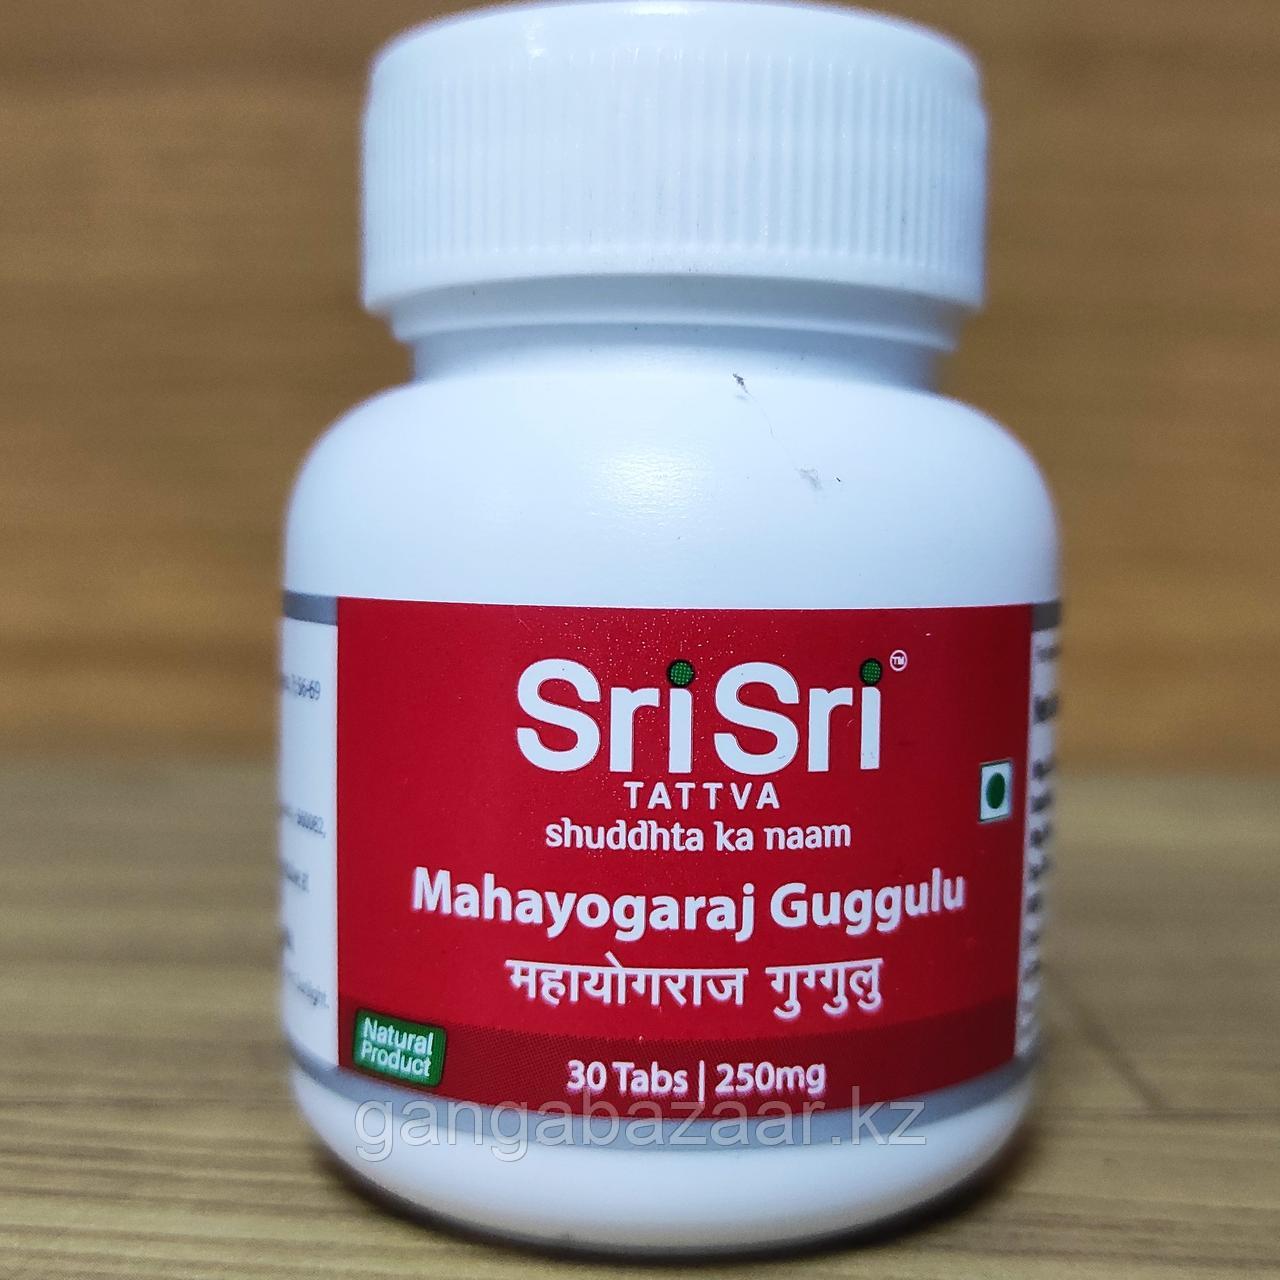 Махайогарадж Гуггул Шри Шри (Mahayogaraj Guggulu Sri Sri) - для суставов, для очищения, 250 mg, 30 таб